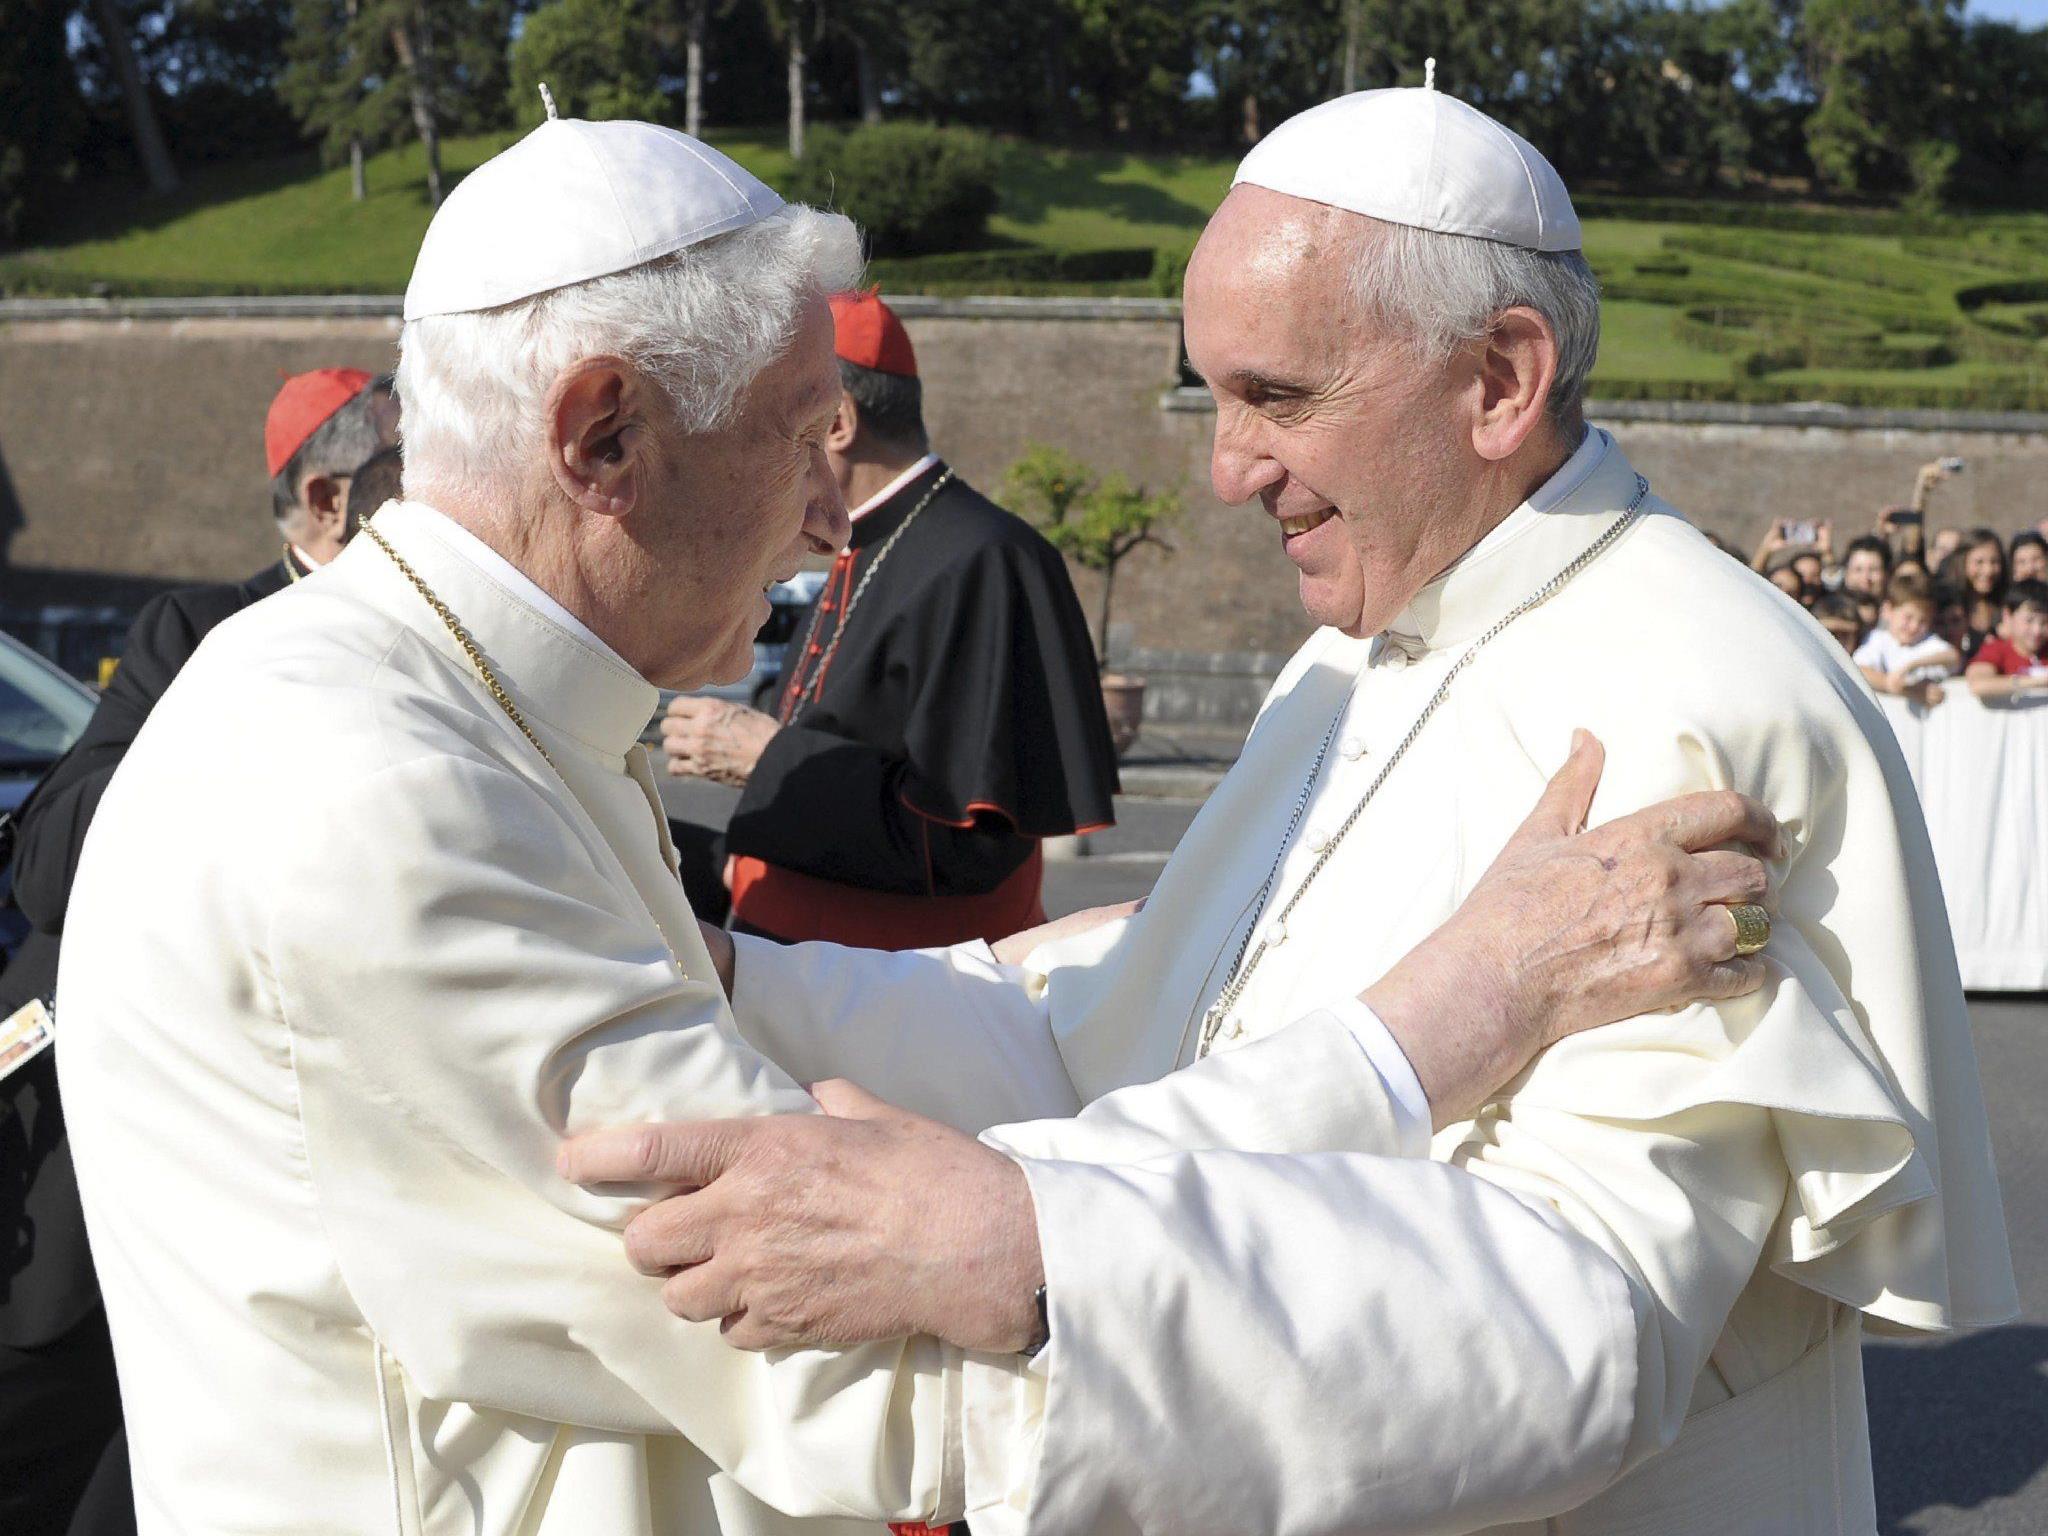 "Papst-Finale" am Sonntag: Online-Kampagne unter dem Schlagwort #pauseforpeace.